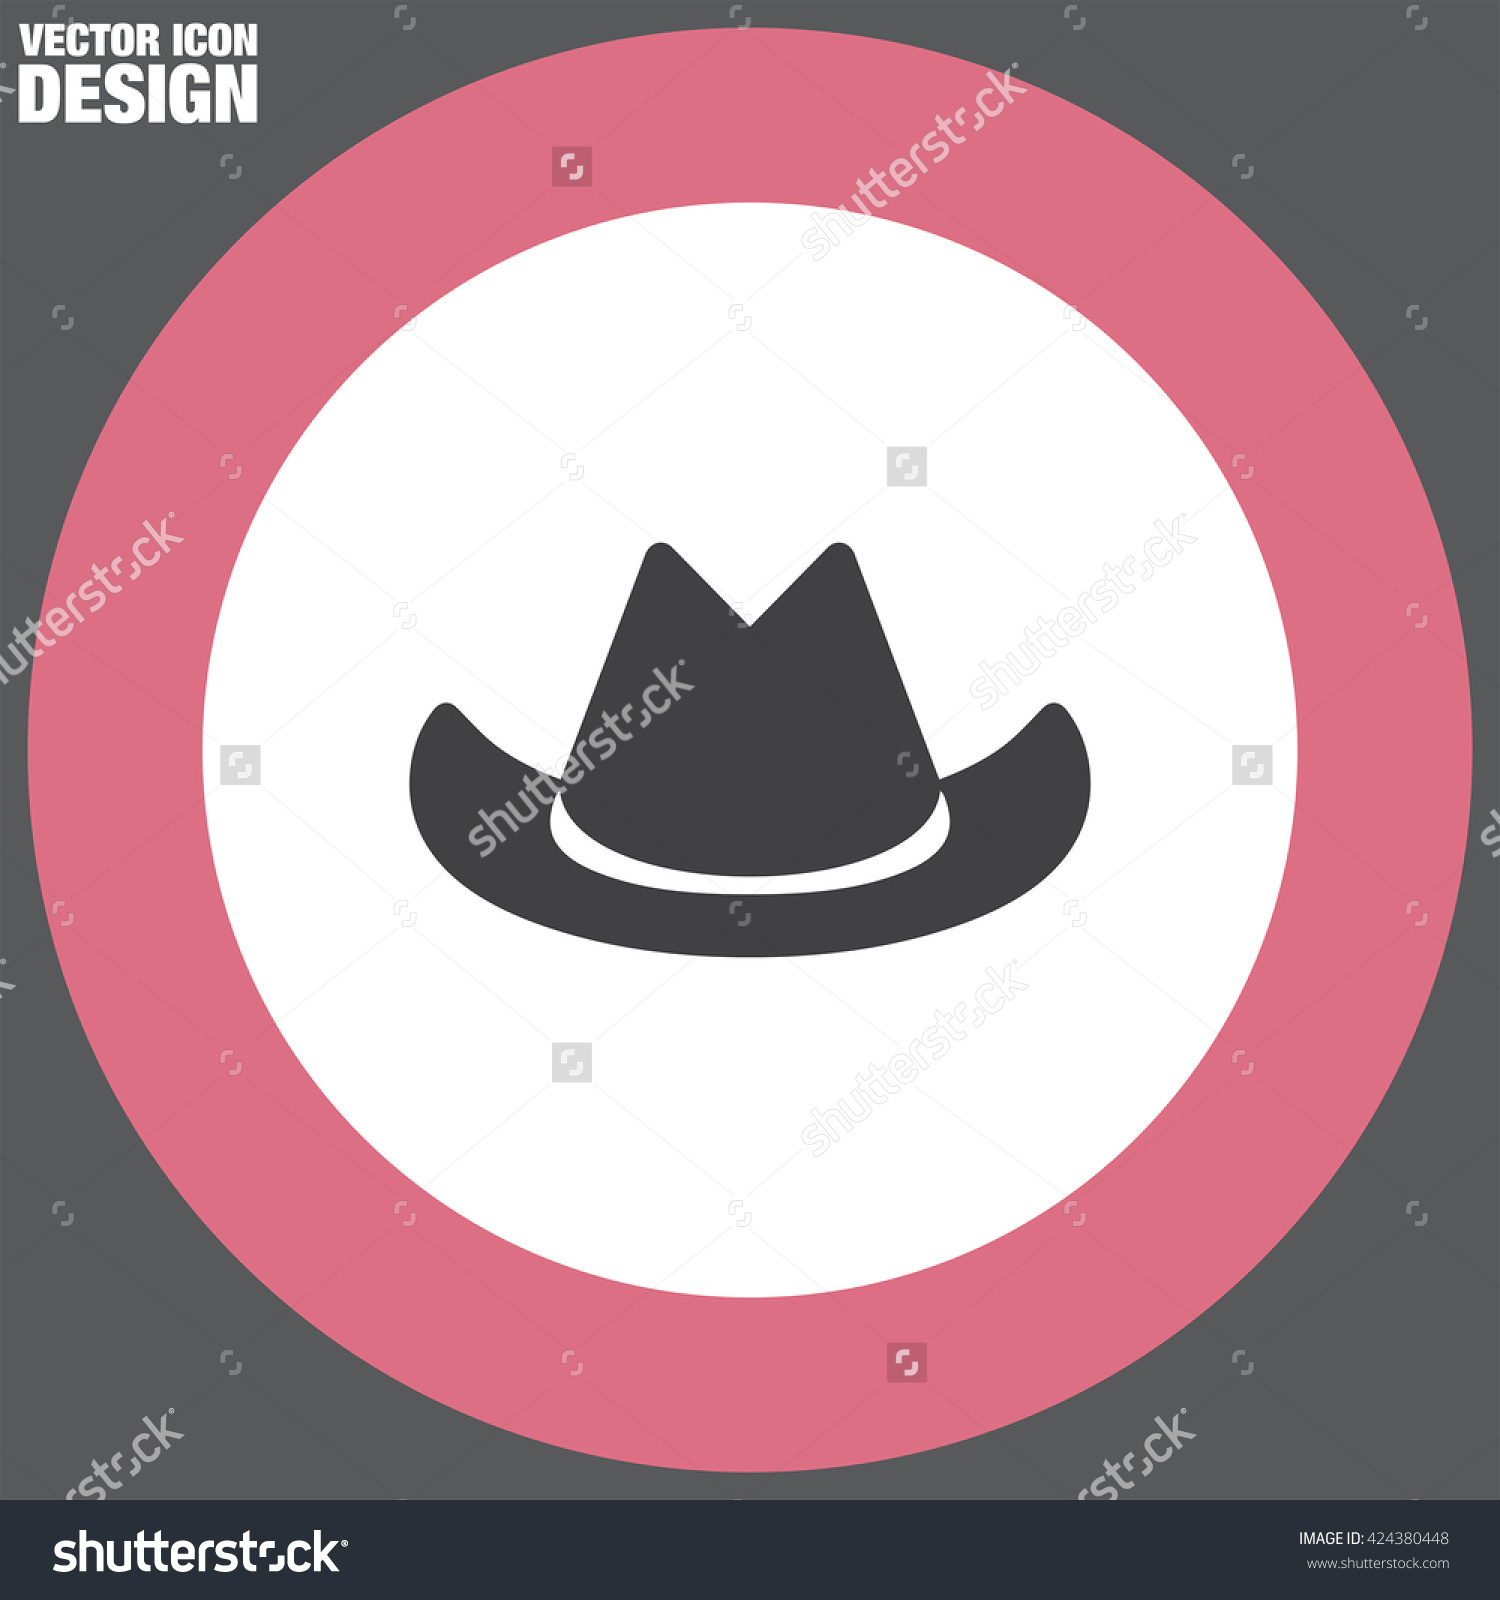 Edit Vectors Free Online - Cowboy hat | Shutterstock Editor